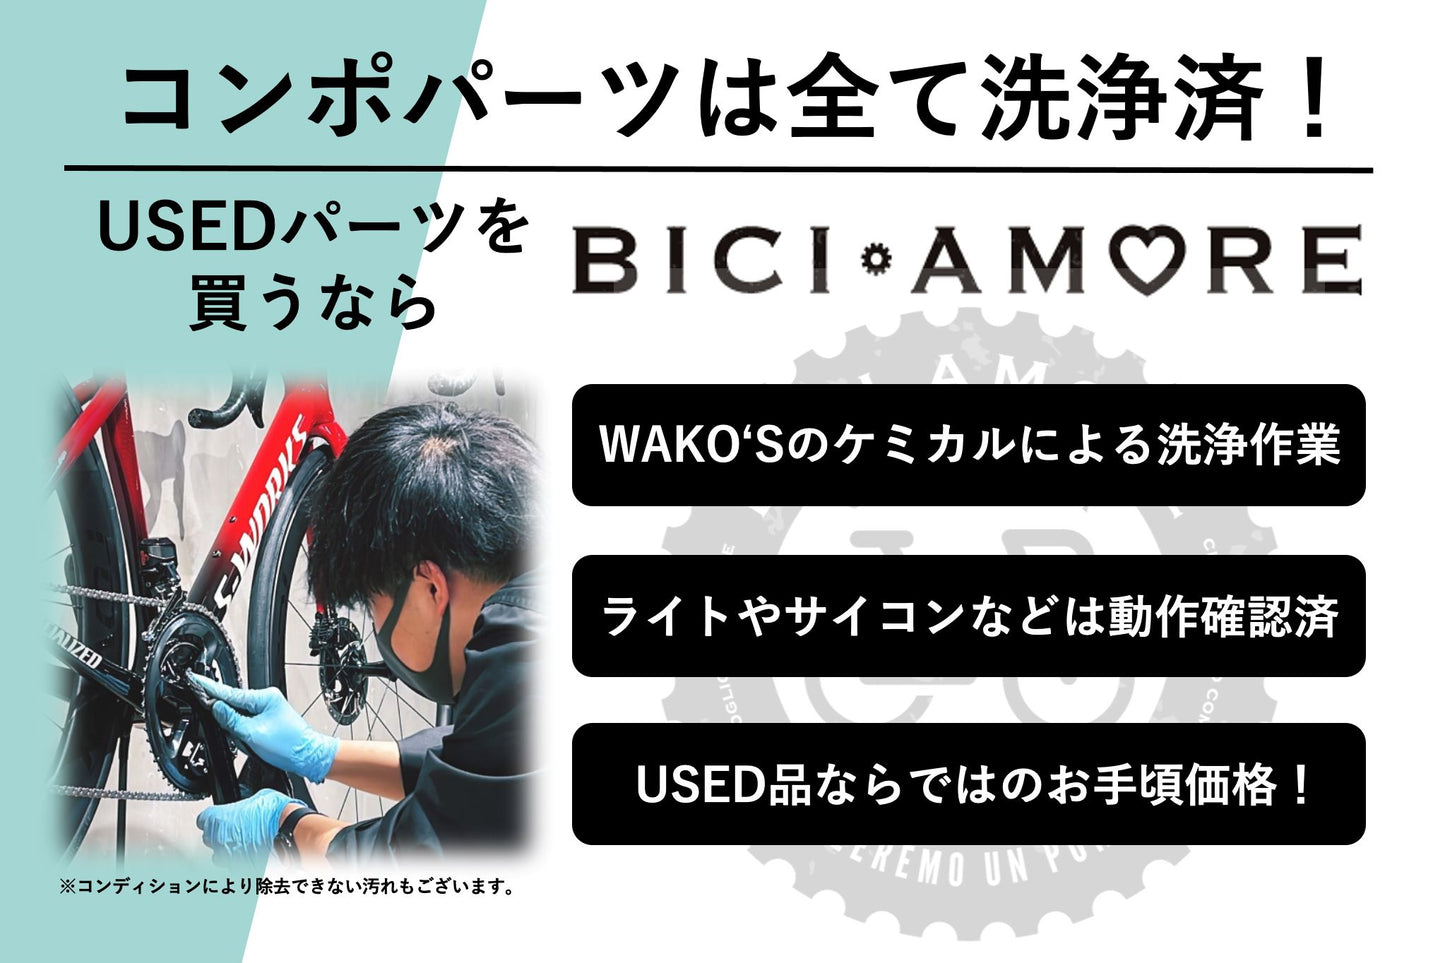 FW175 シマノ SHIMANO BR-R7070 ディスクブレーキキャリパー 使用感あり